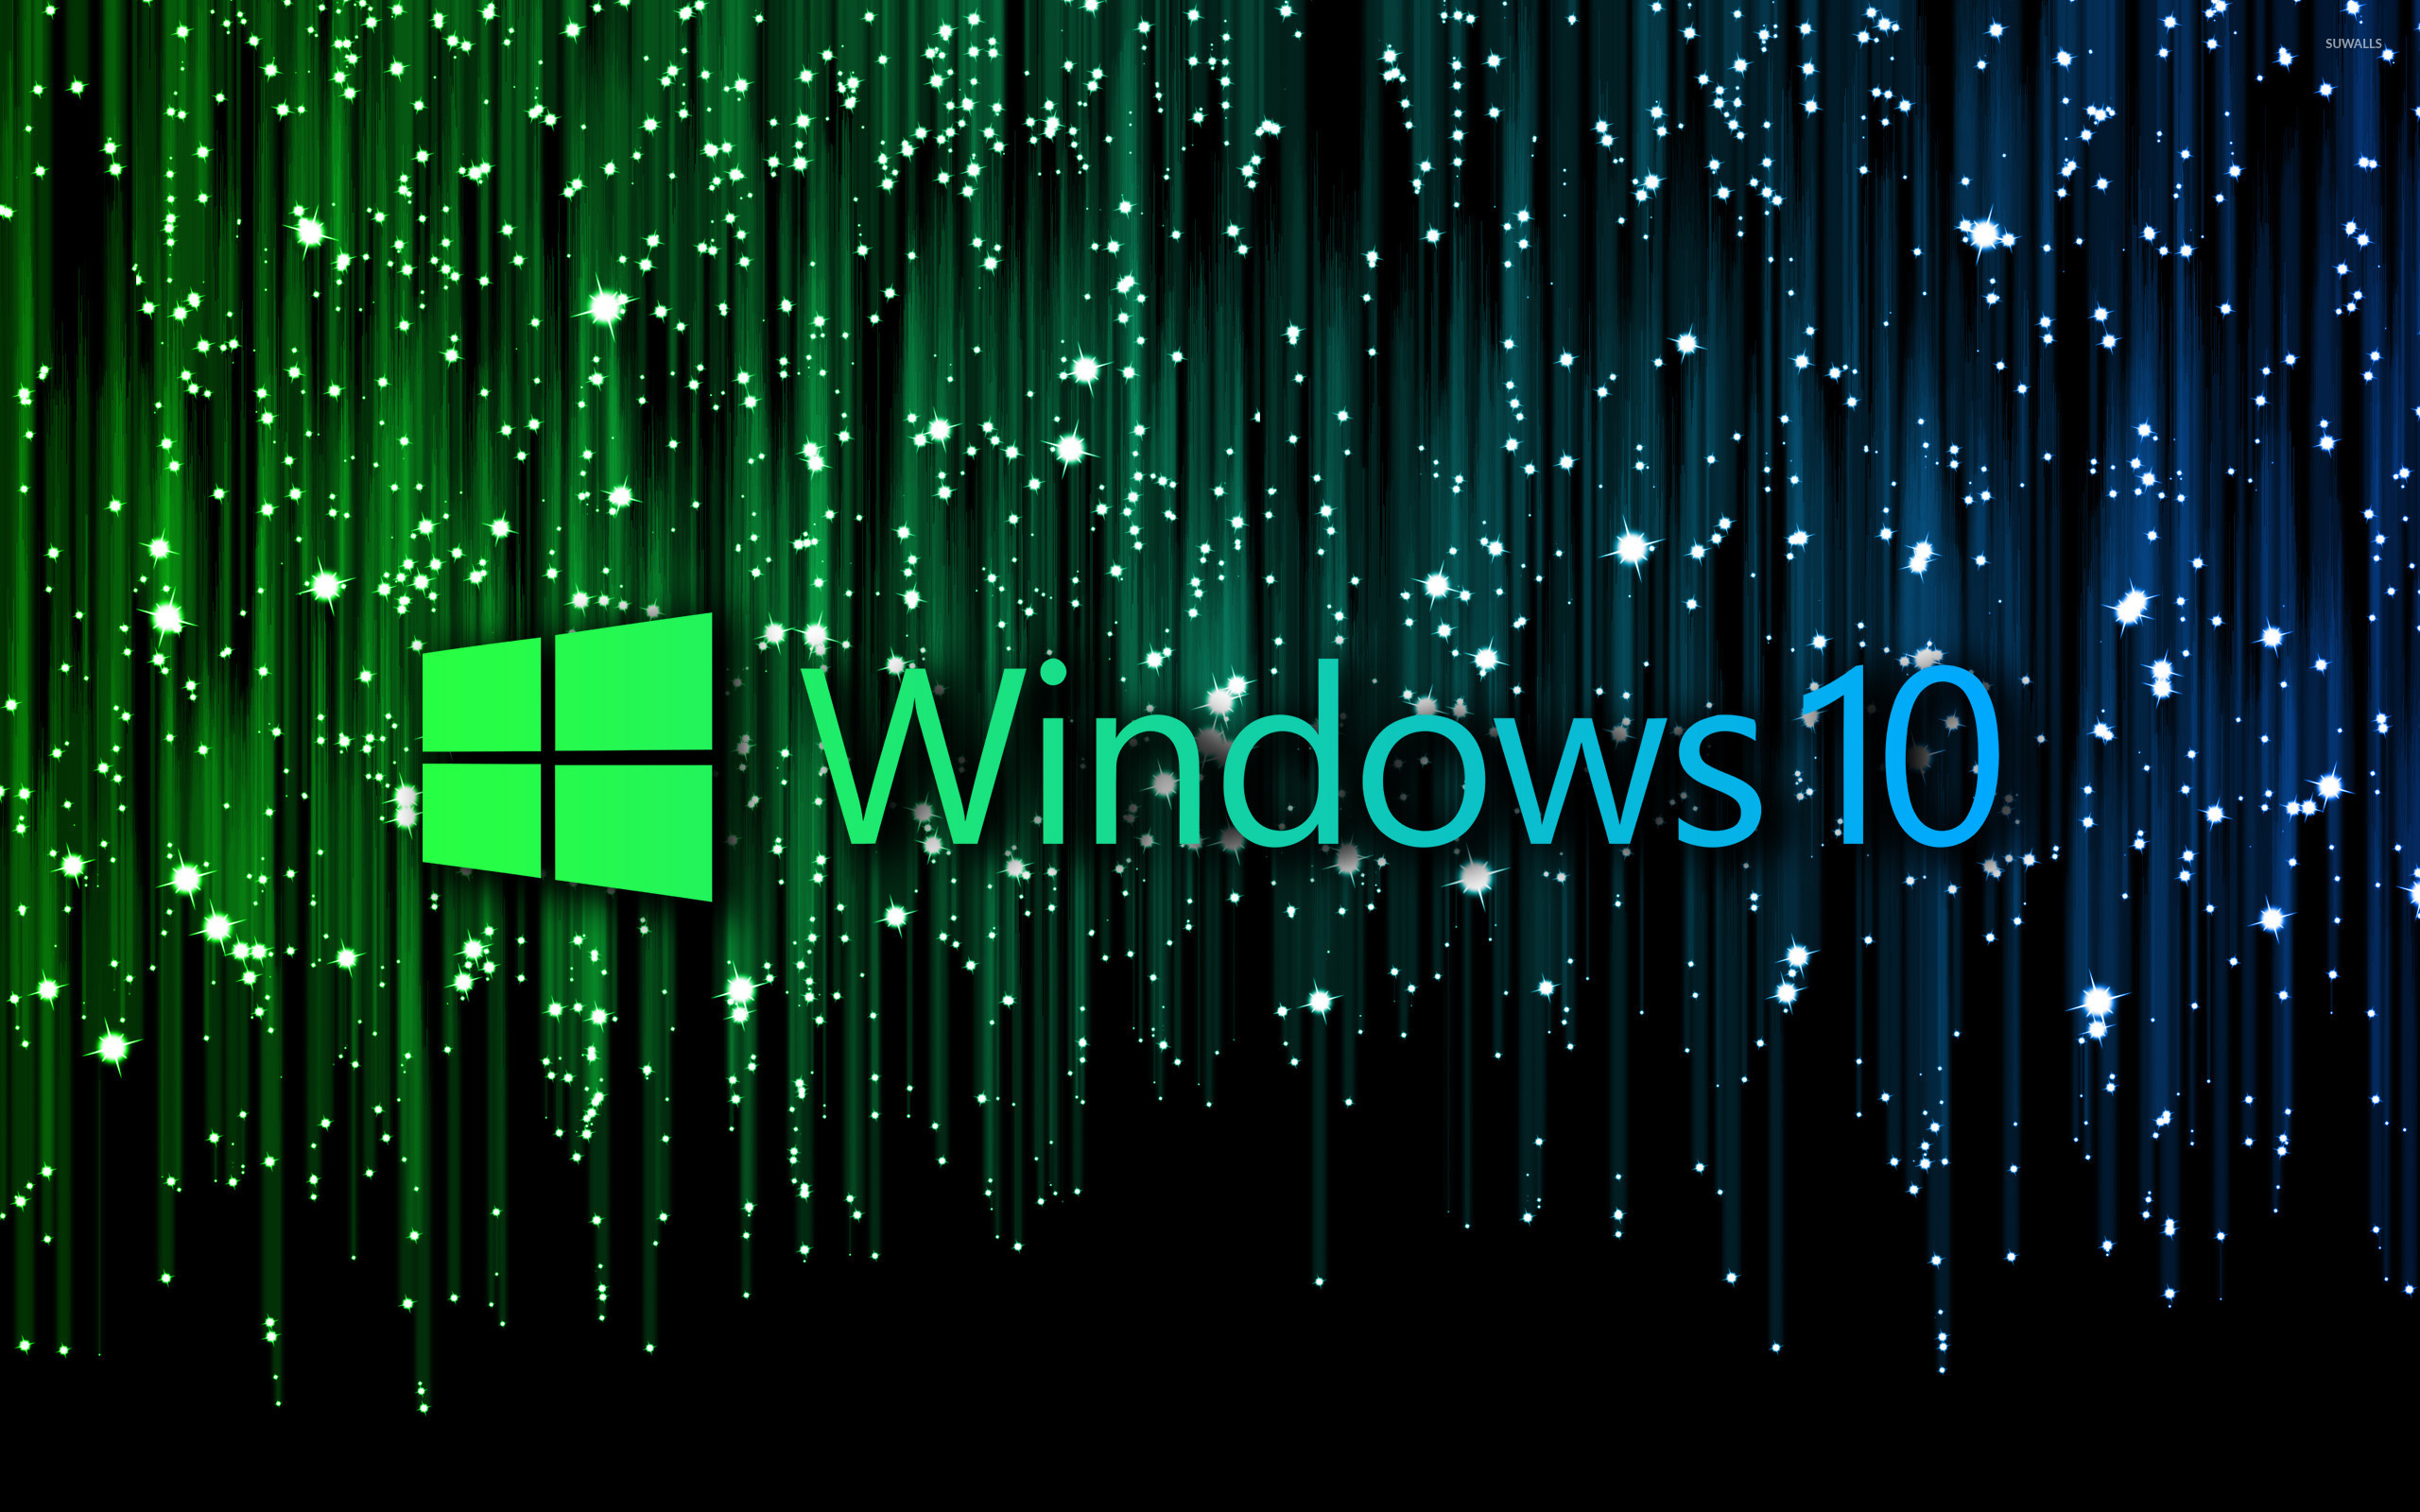 Windows 10 Text Logo On Meteor Shower Wallpaper Computer Wallpapers